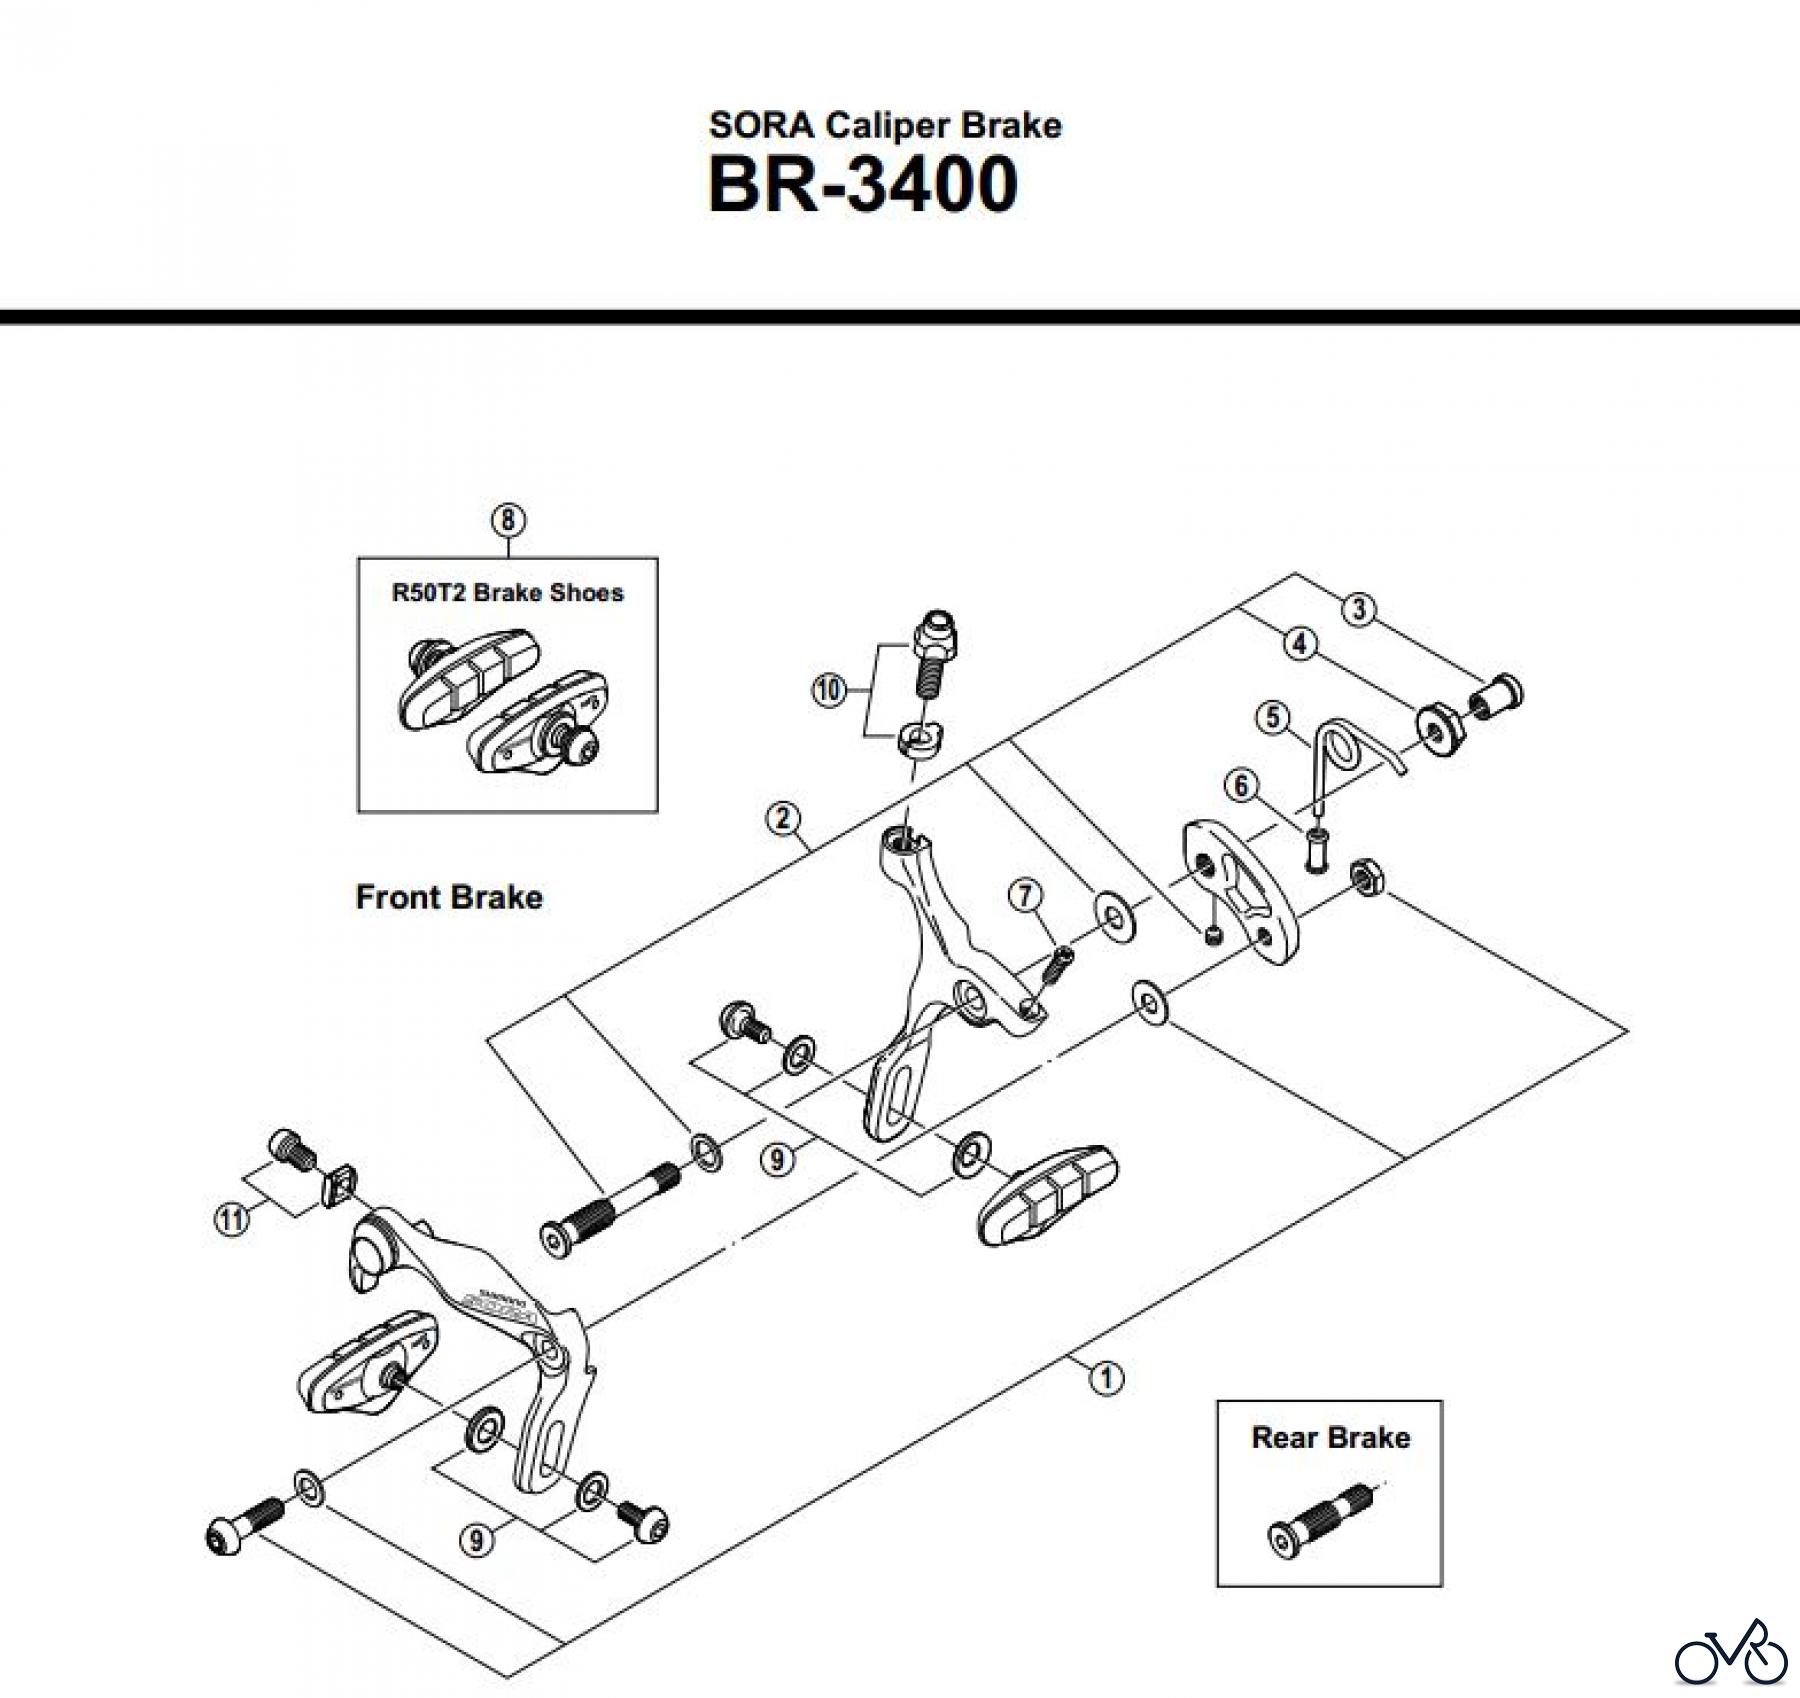  Shimano BR Brake - Bremse BR-3400